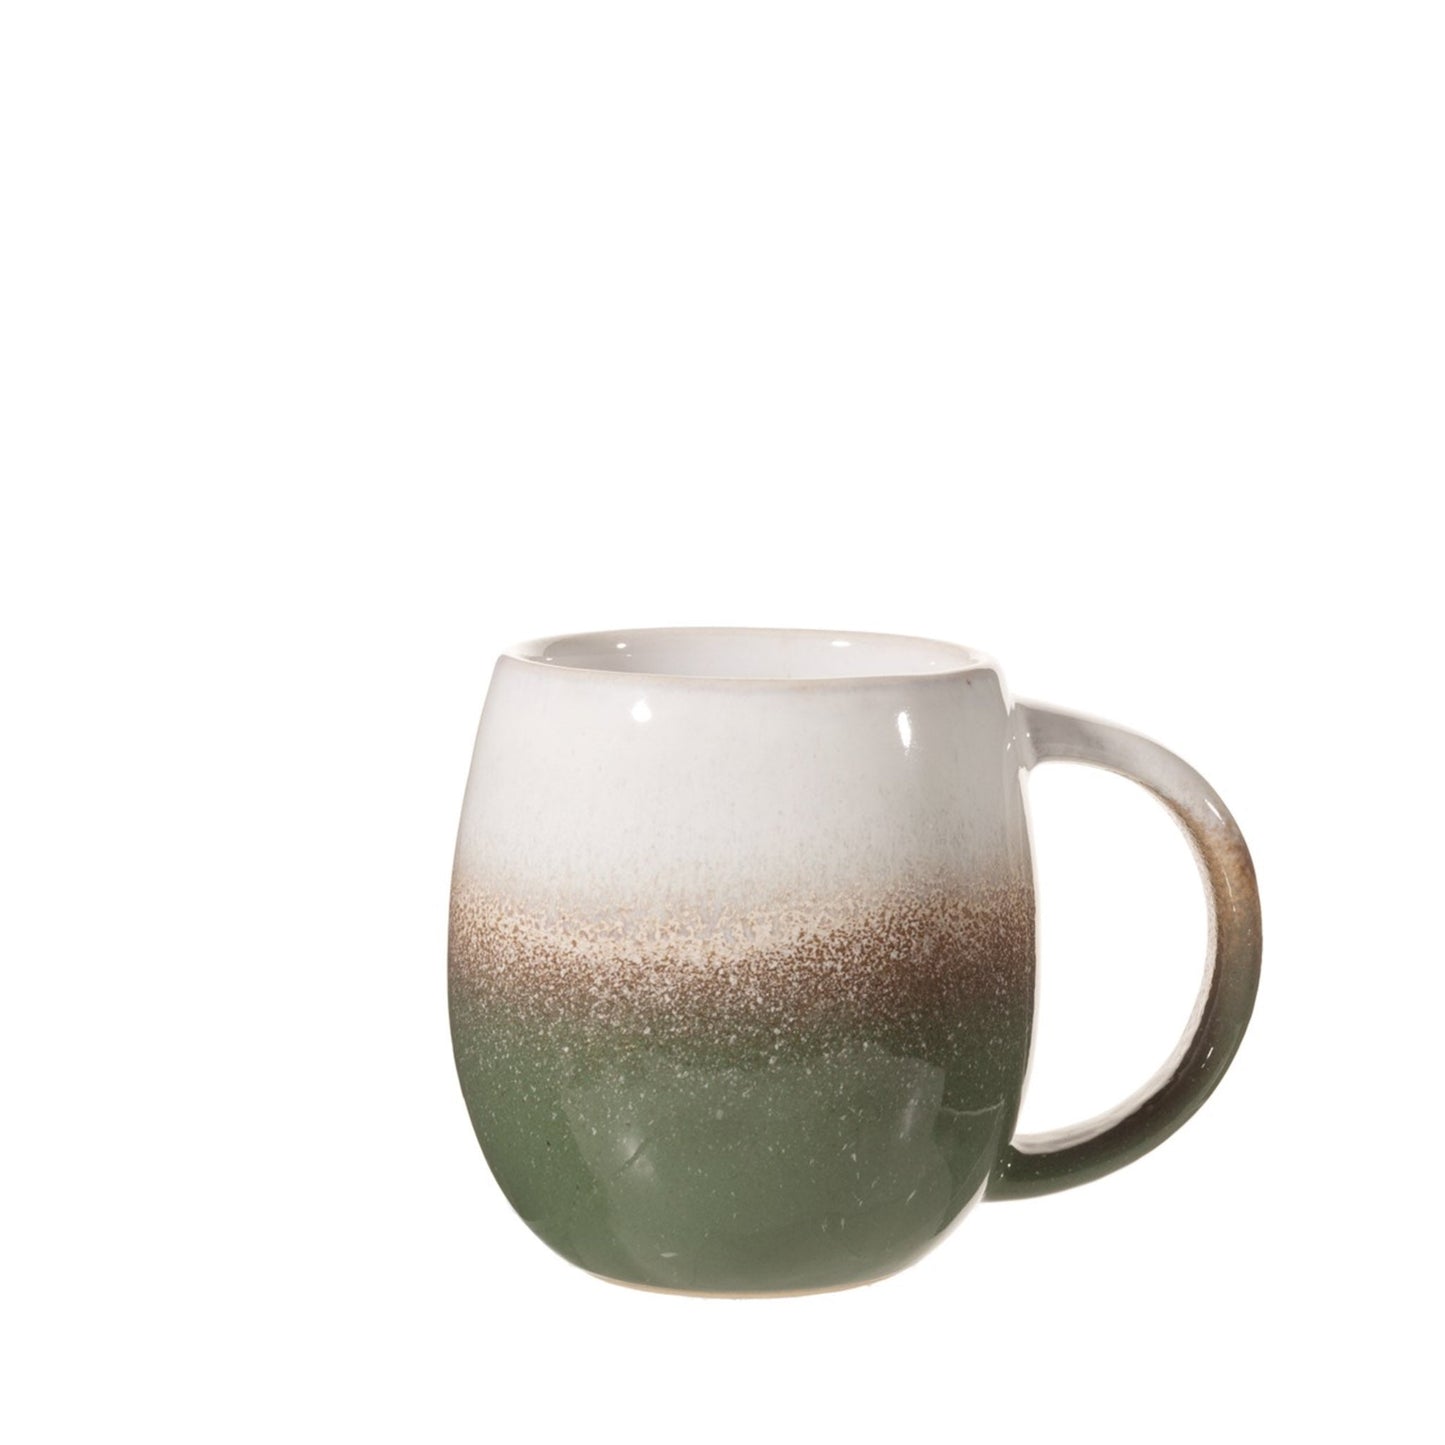 Tauchglasierte, grüne Tasse in Ombré-Optik - Vandeley